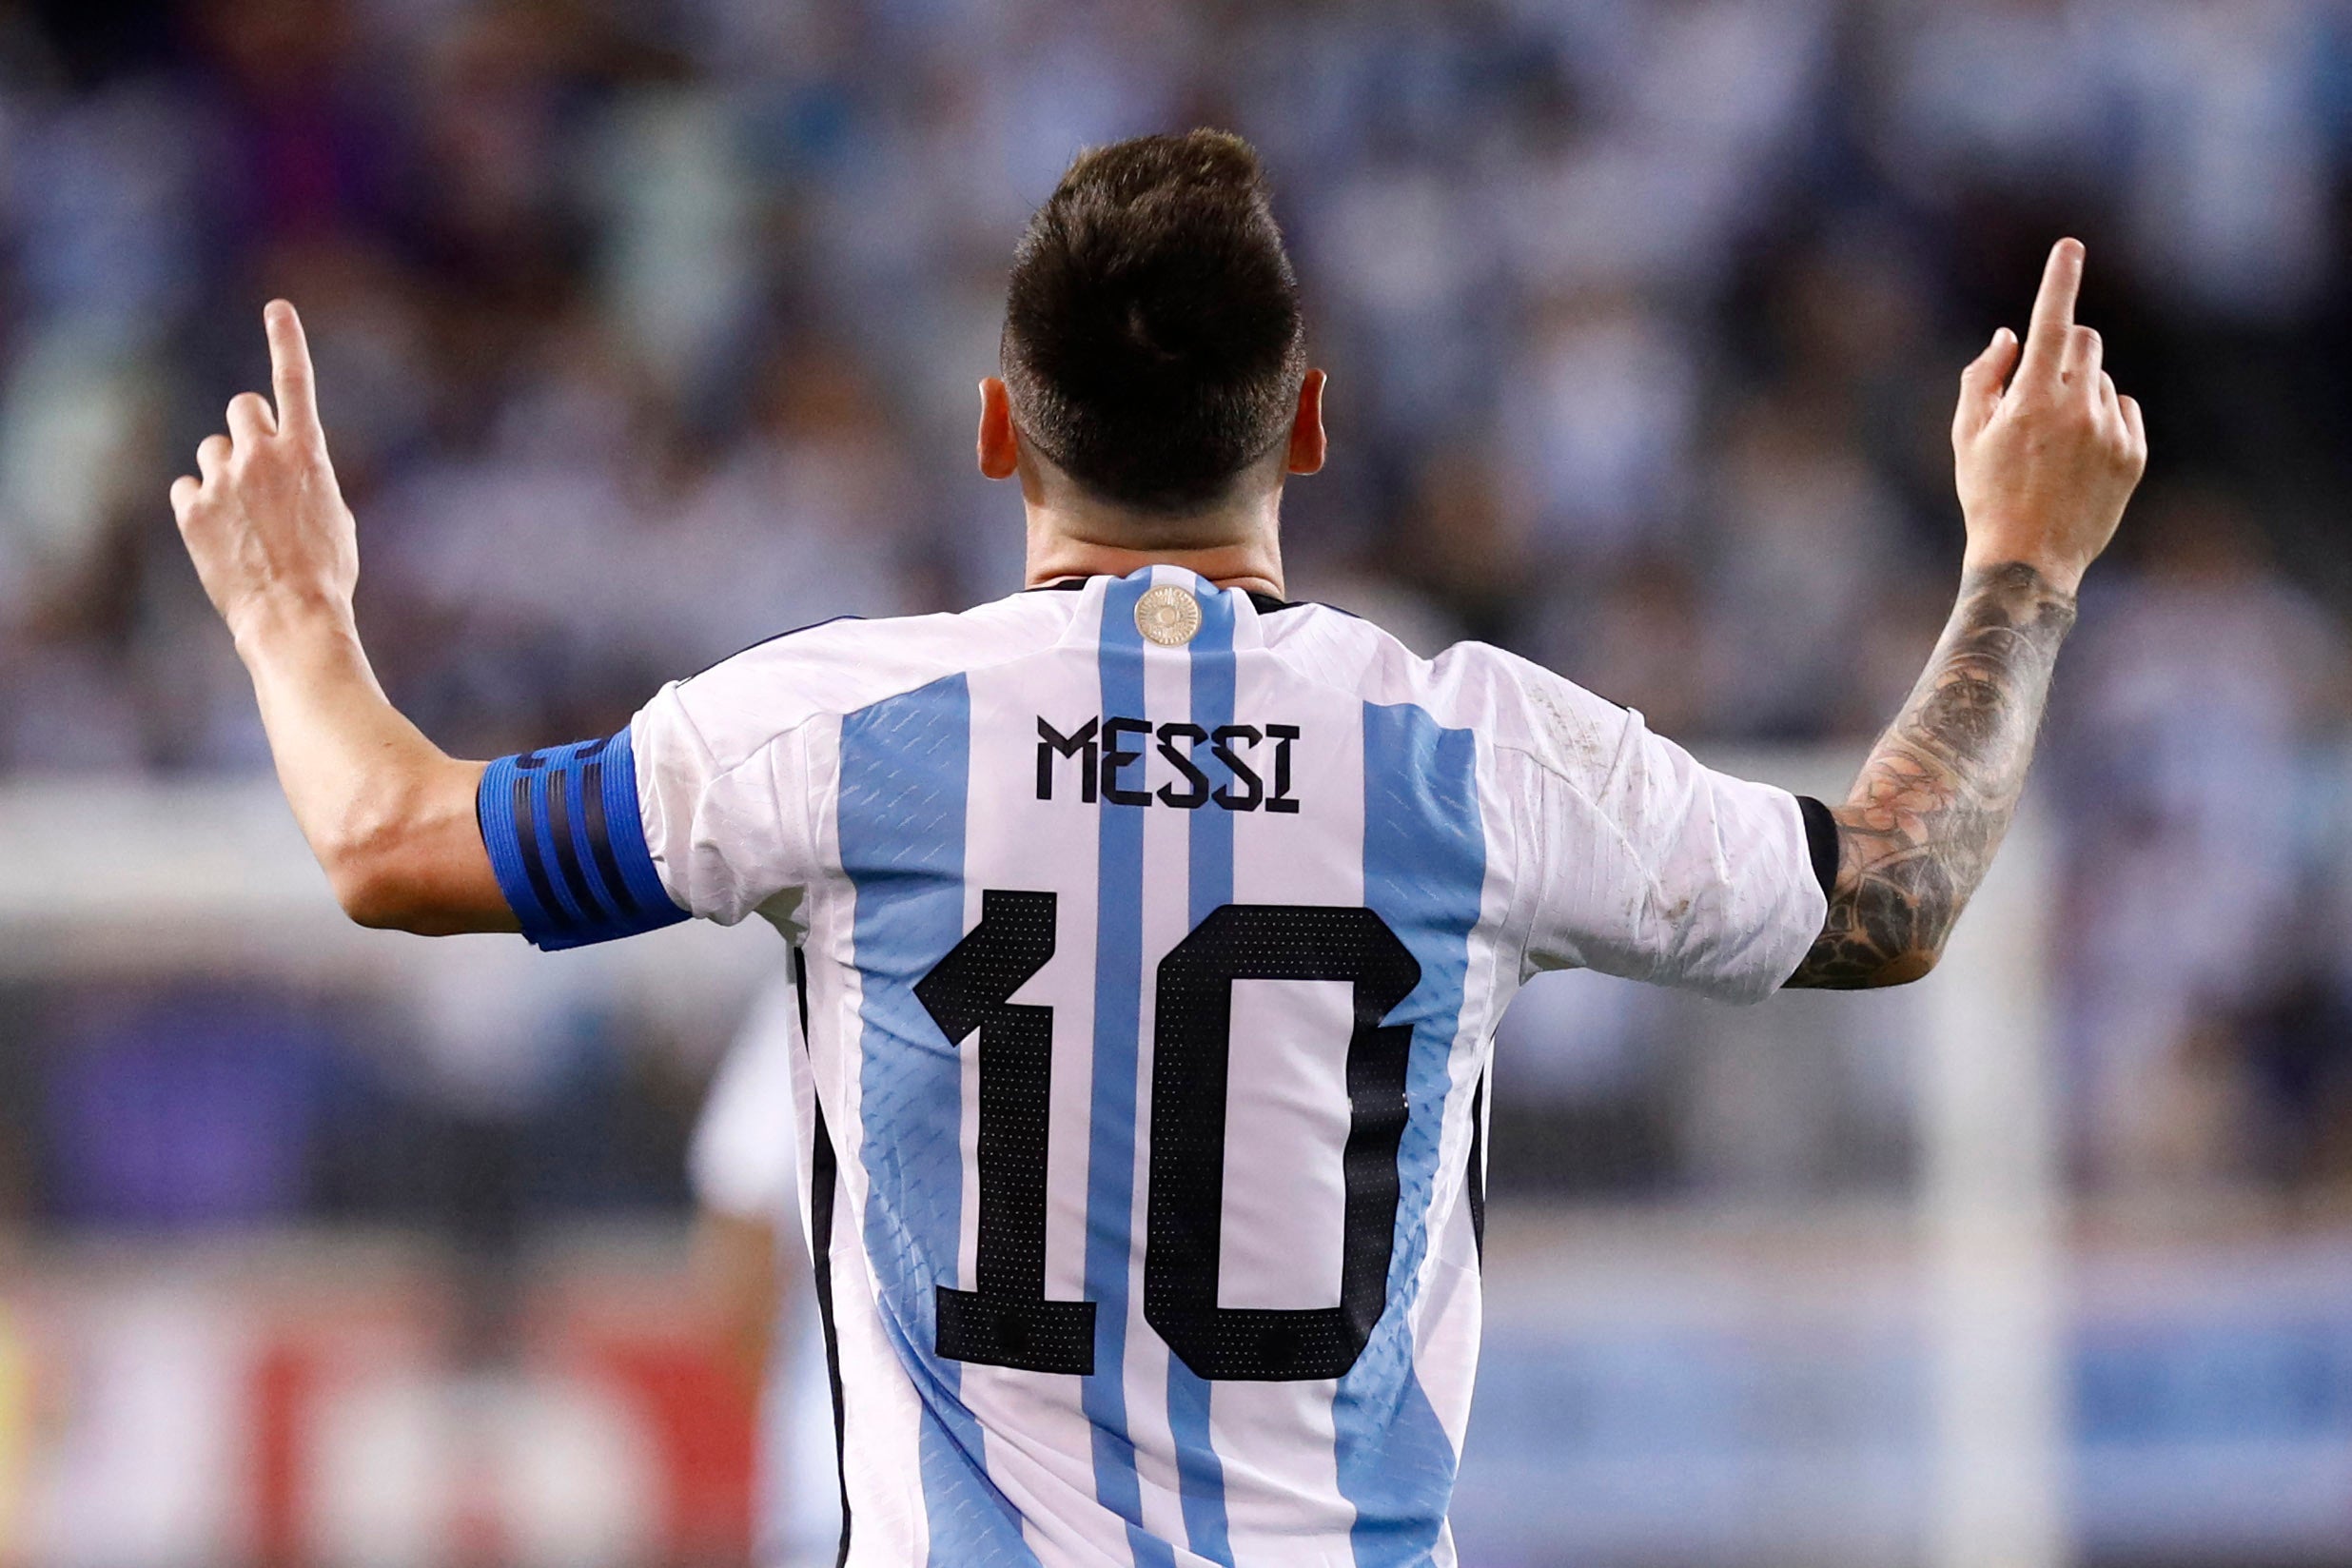 Argentina’s key man is Lionel Messi